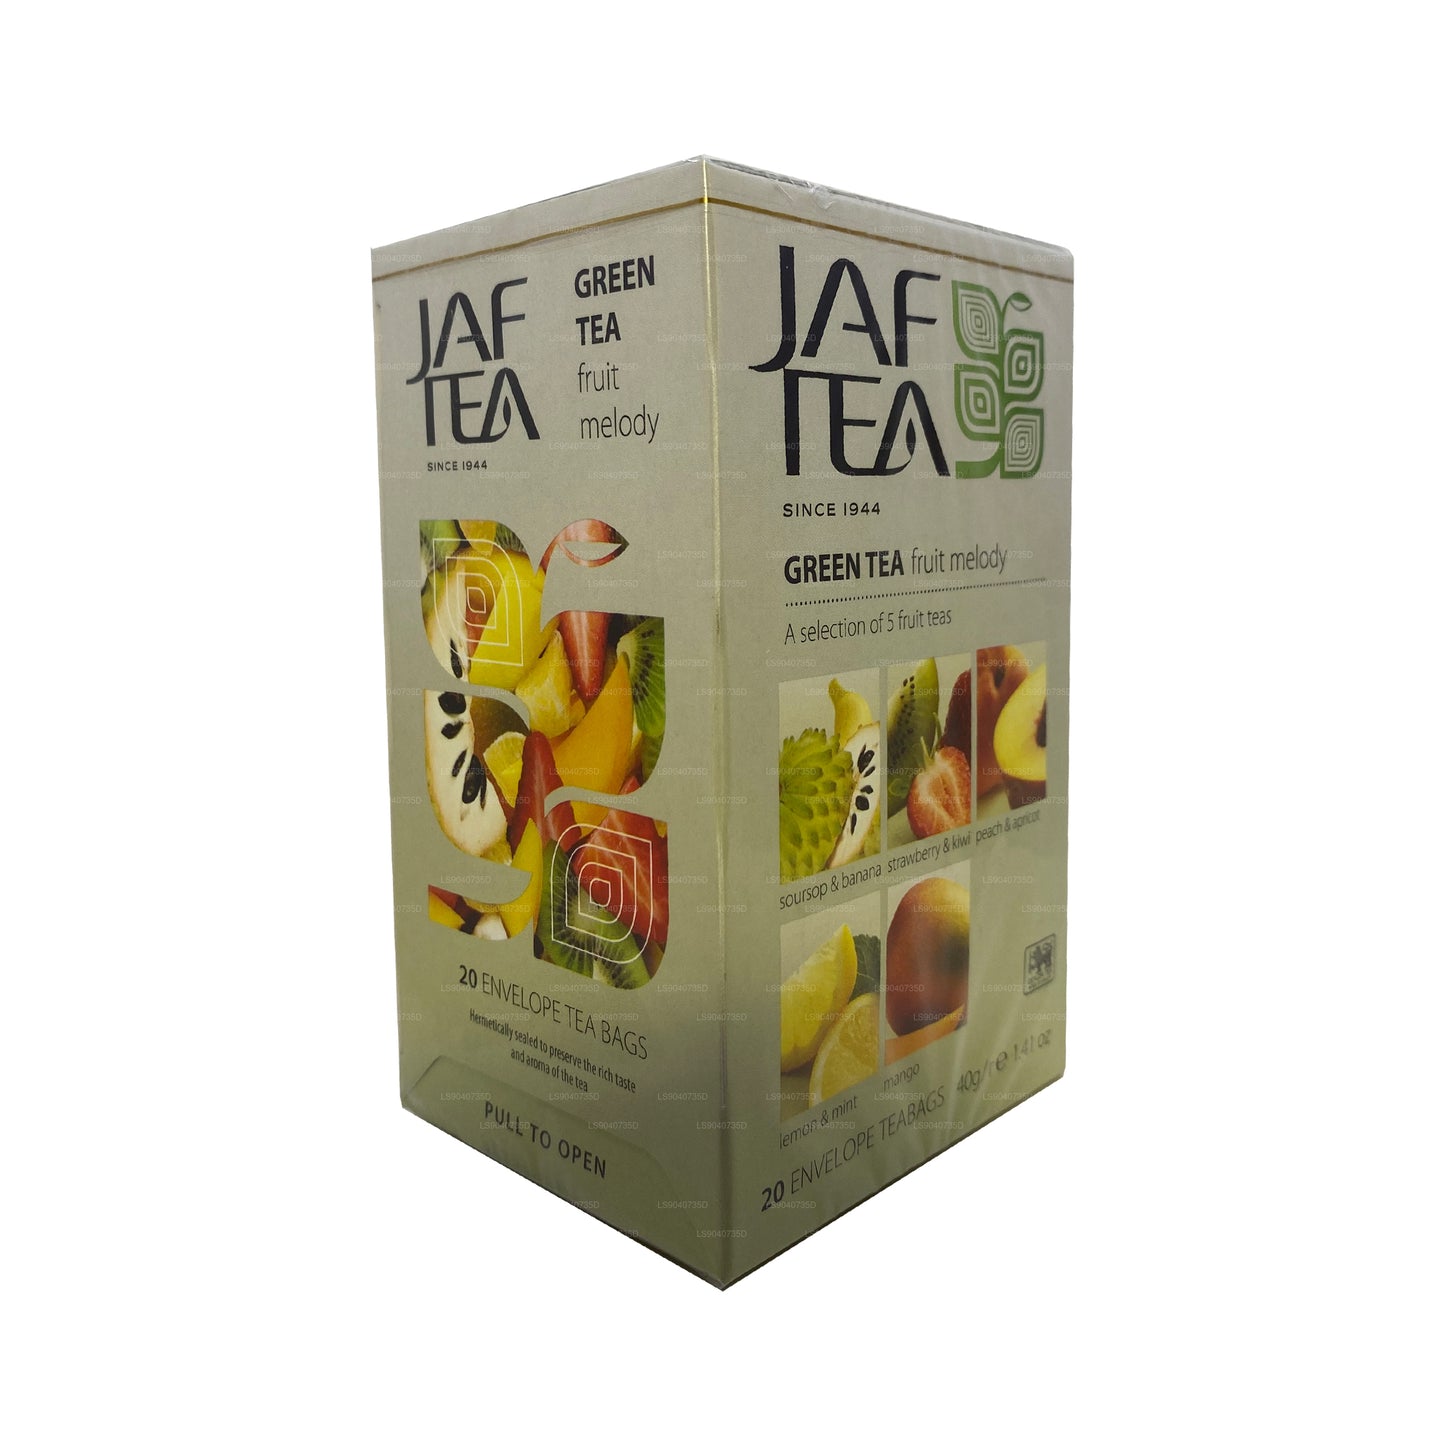 Jaf Tea Pure Green 系列绿茶水果旋律 (40g) 20 个茶包